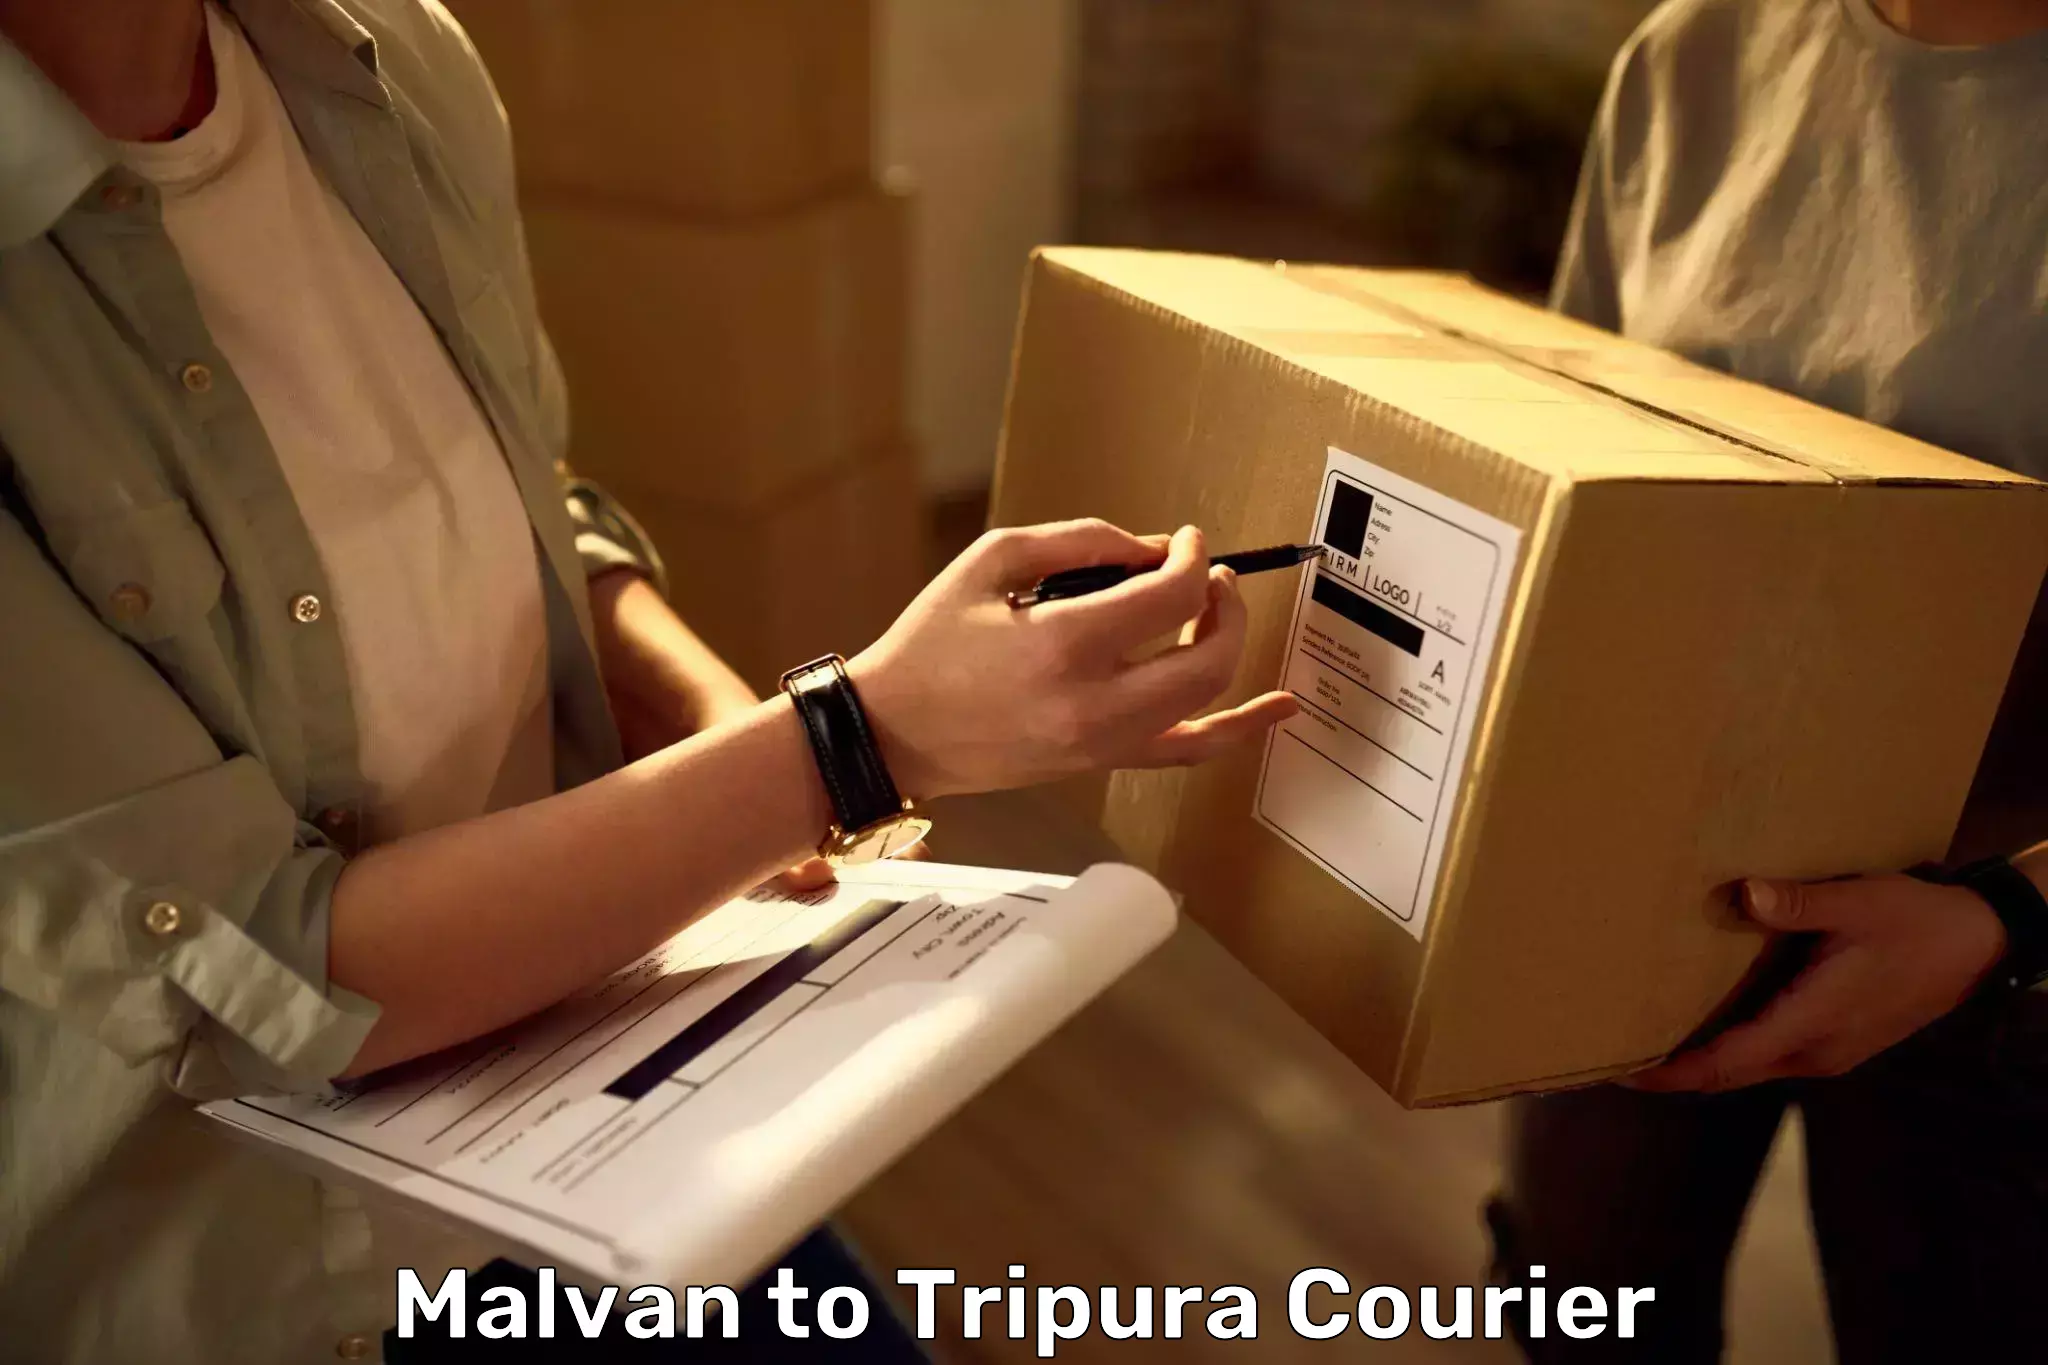 Same day luggage service Malvan to Udaipur Tripura